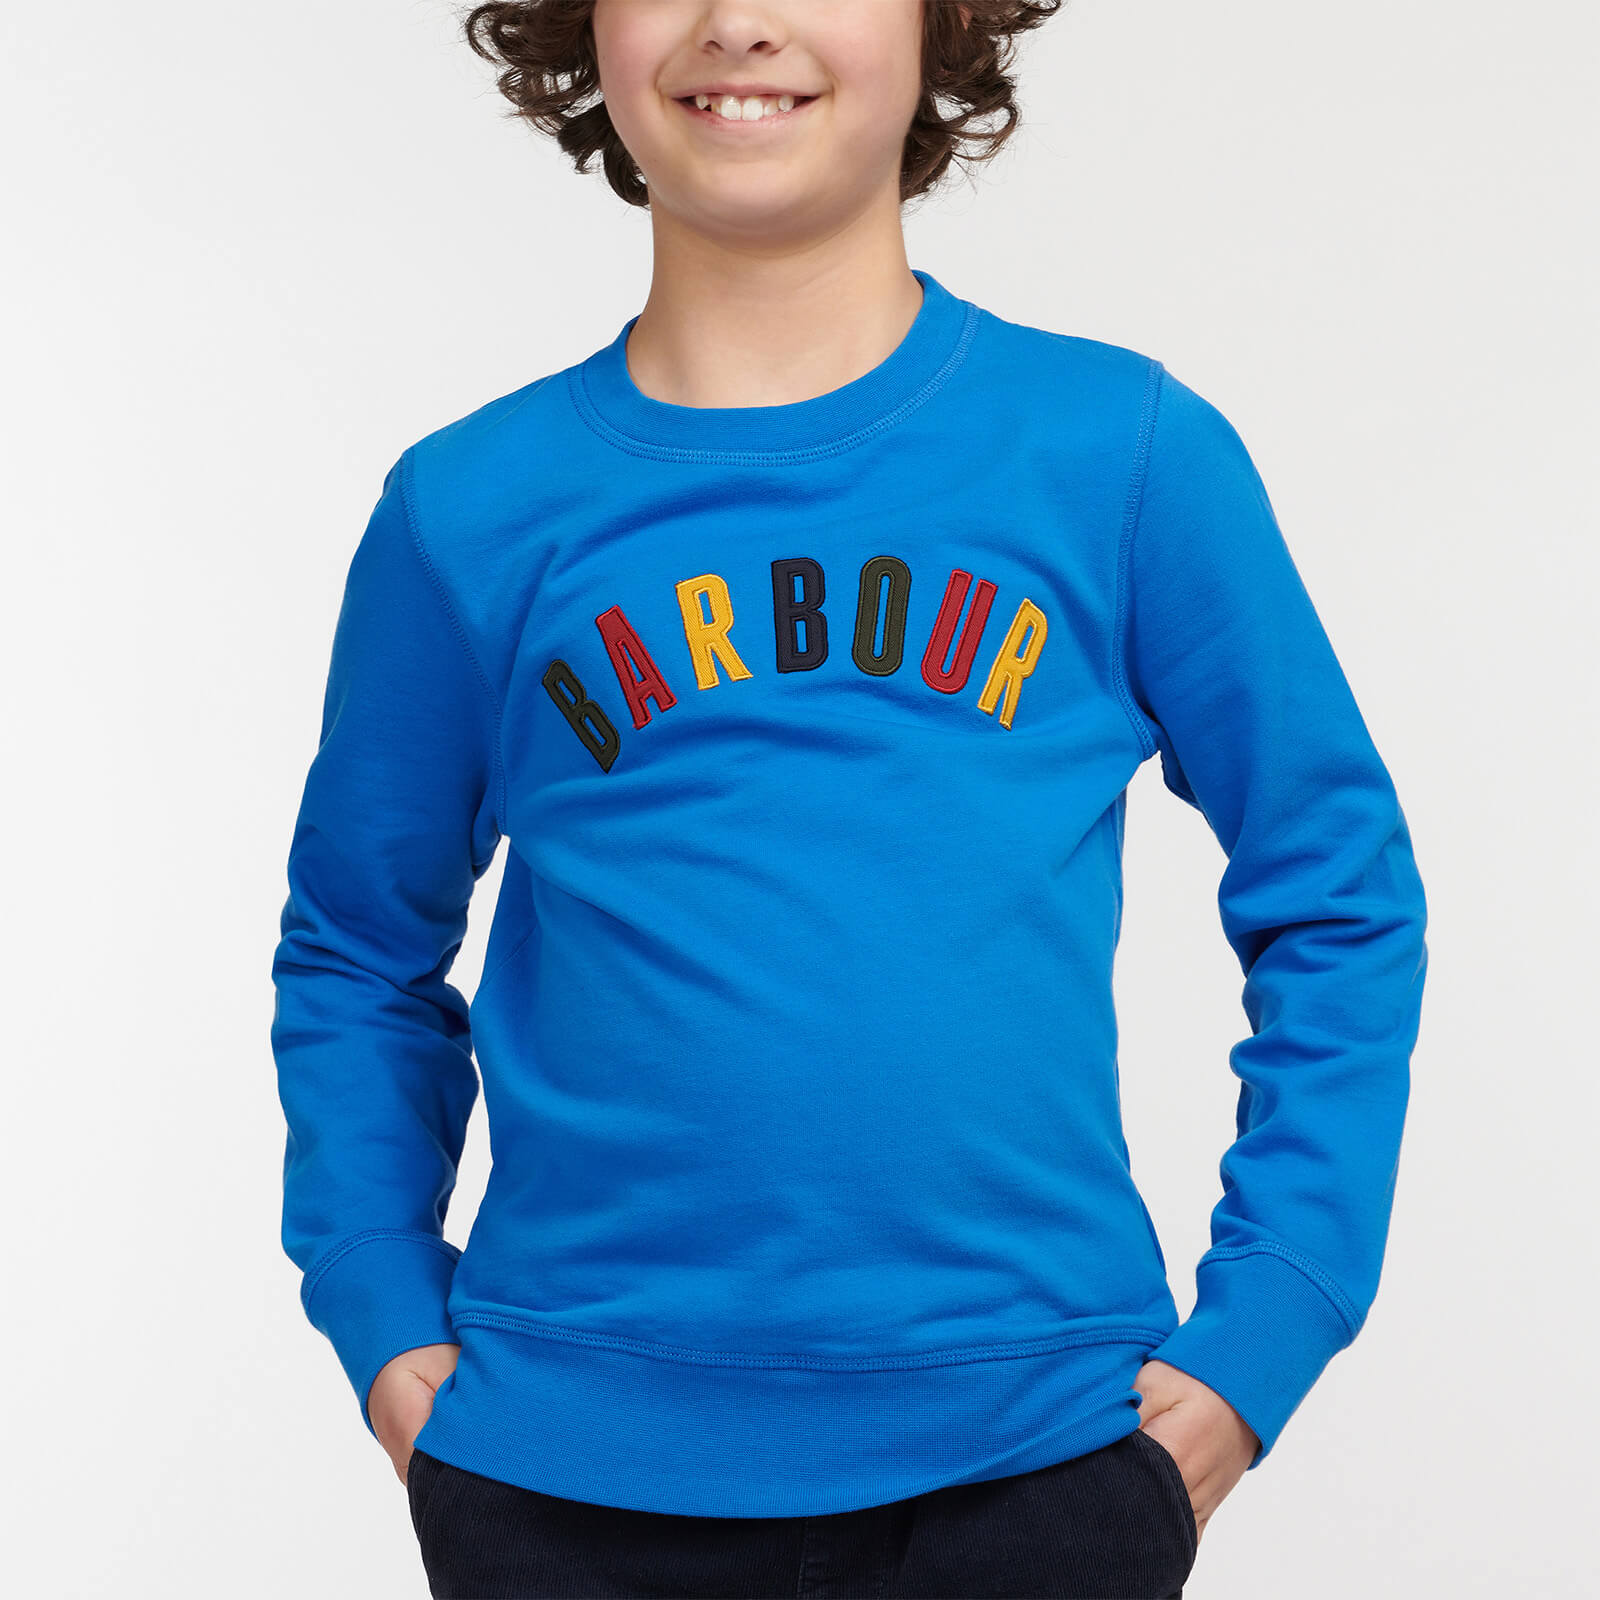 Barbour Boys' Oliver Crew Neck Sweatshirt - Frost Blue - S (6-7 Years)